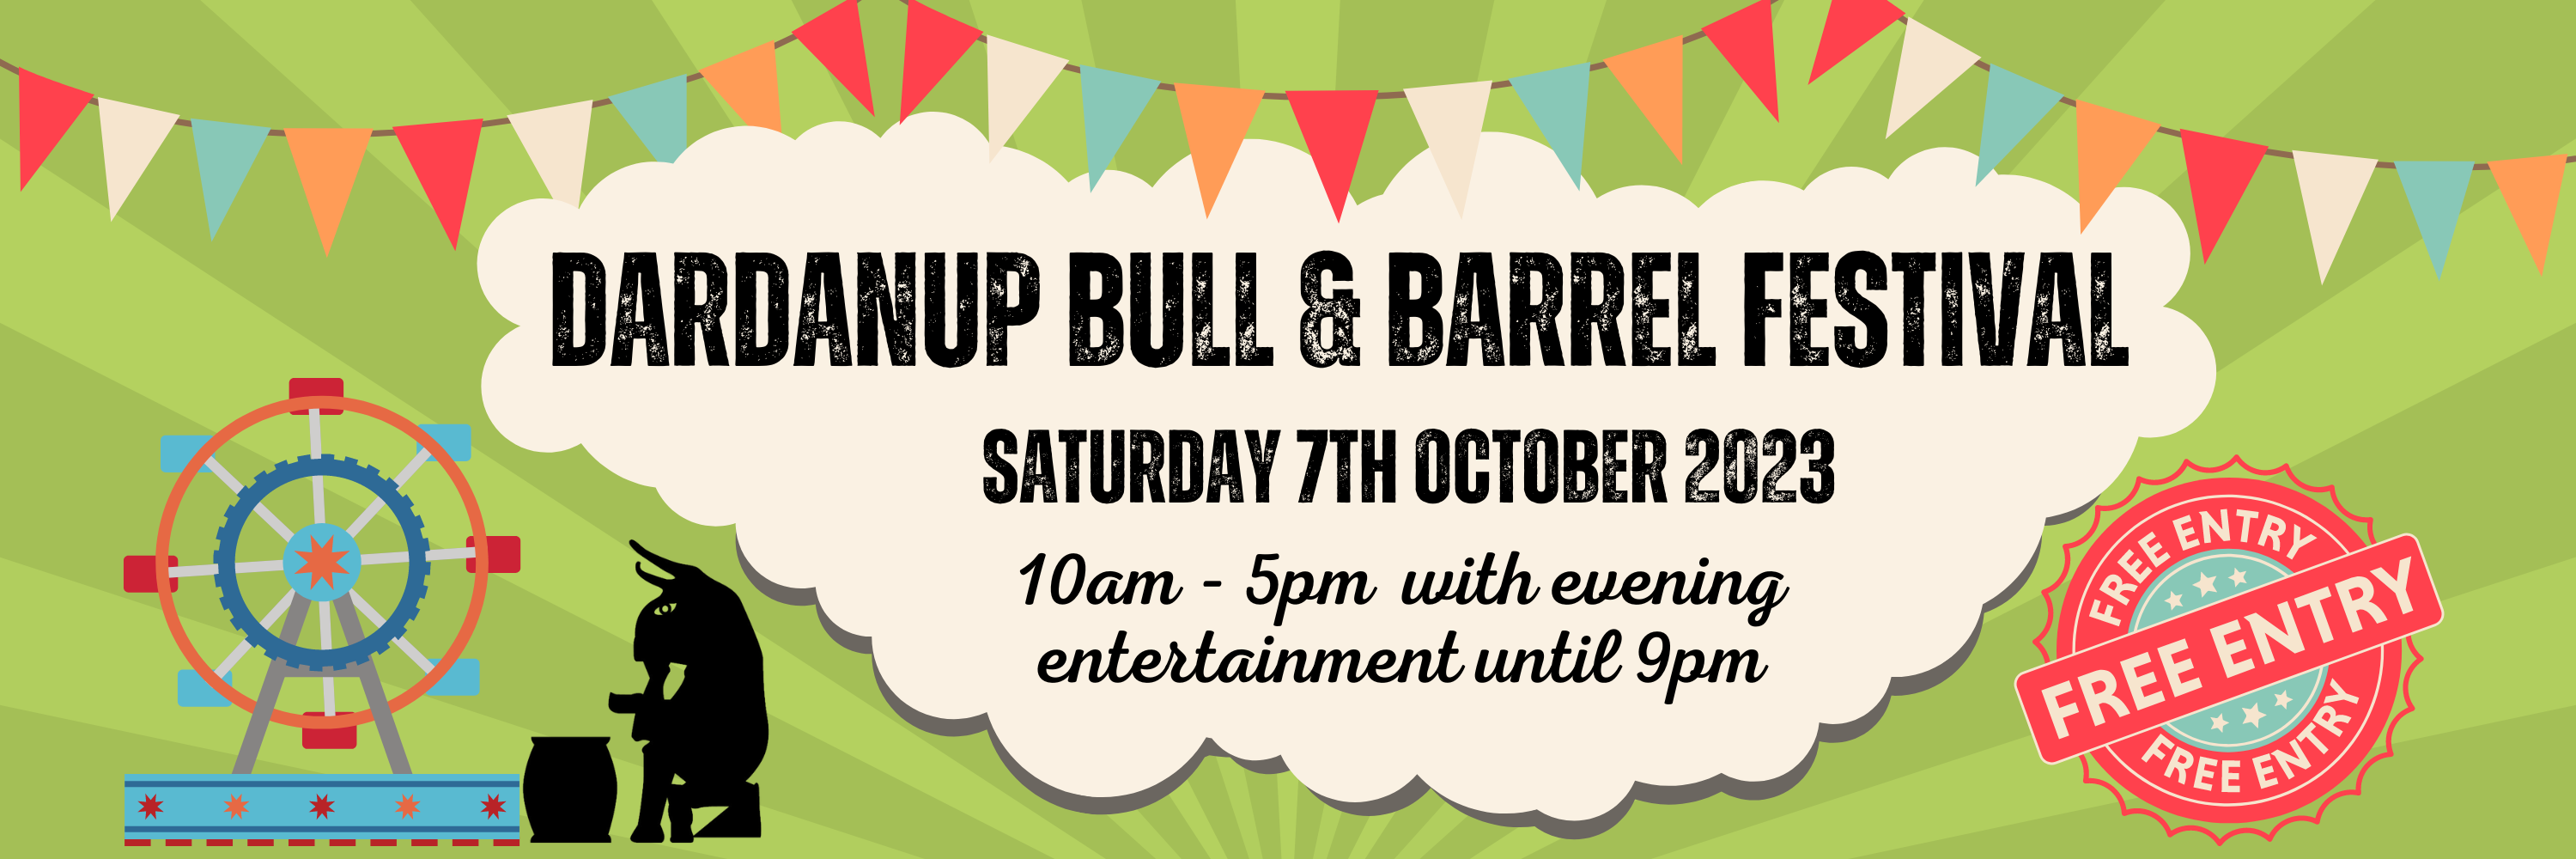 2023 Dardanup Bull & Barrel Festival - FB Banner - 22082023